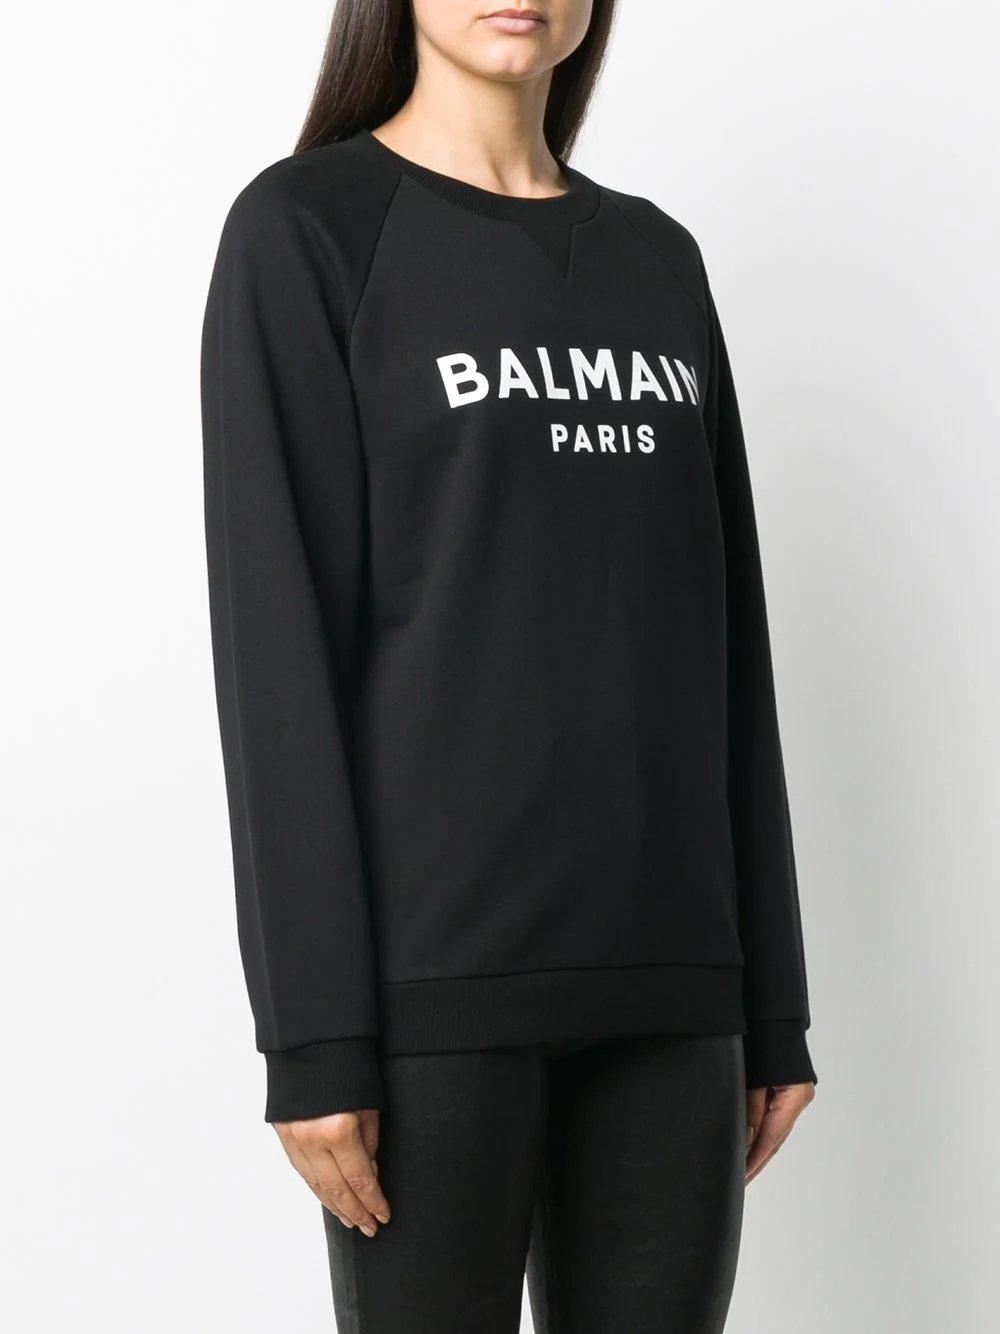 Balmain Sweatshirts in Black - Lyst